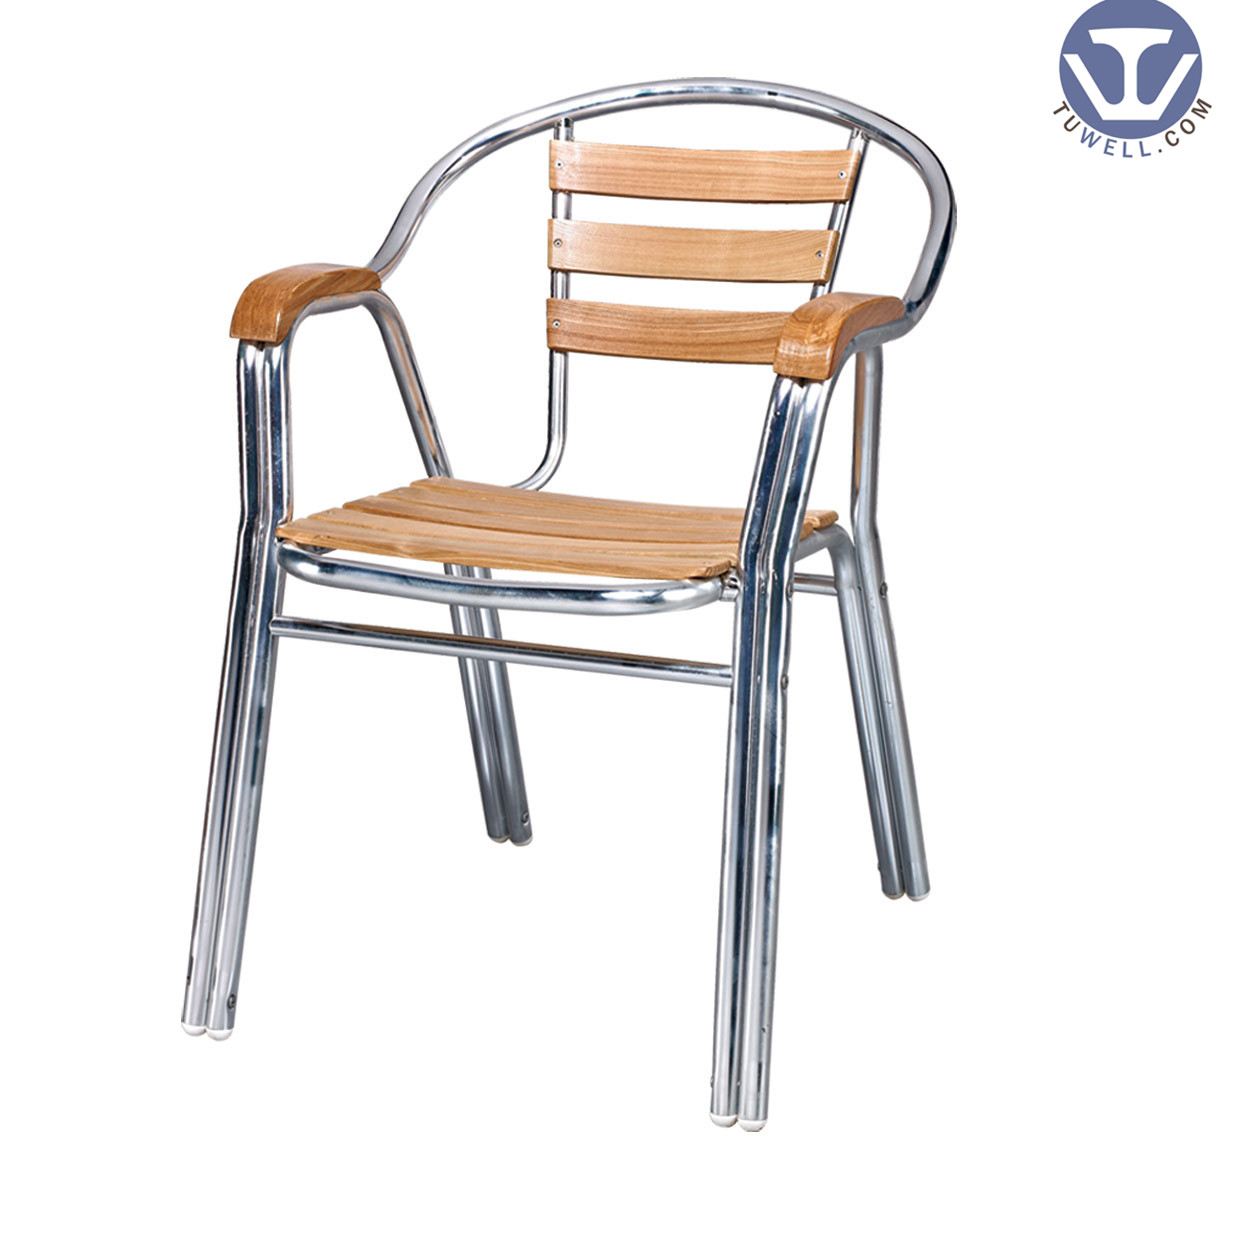 TW4014 Aluminum wooden chair Leisure chair